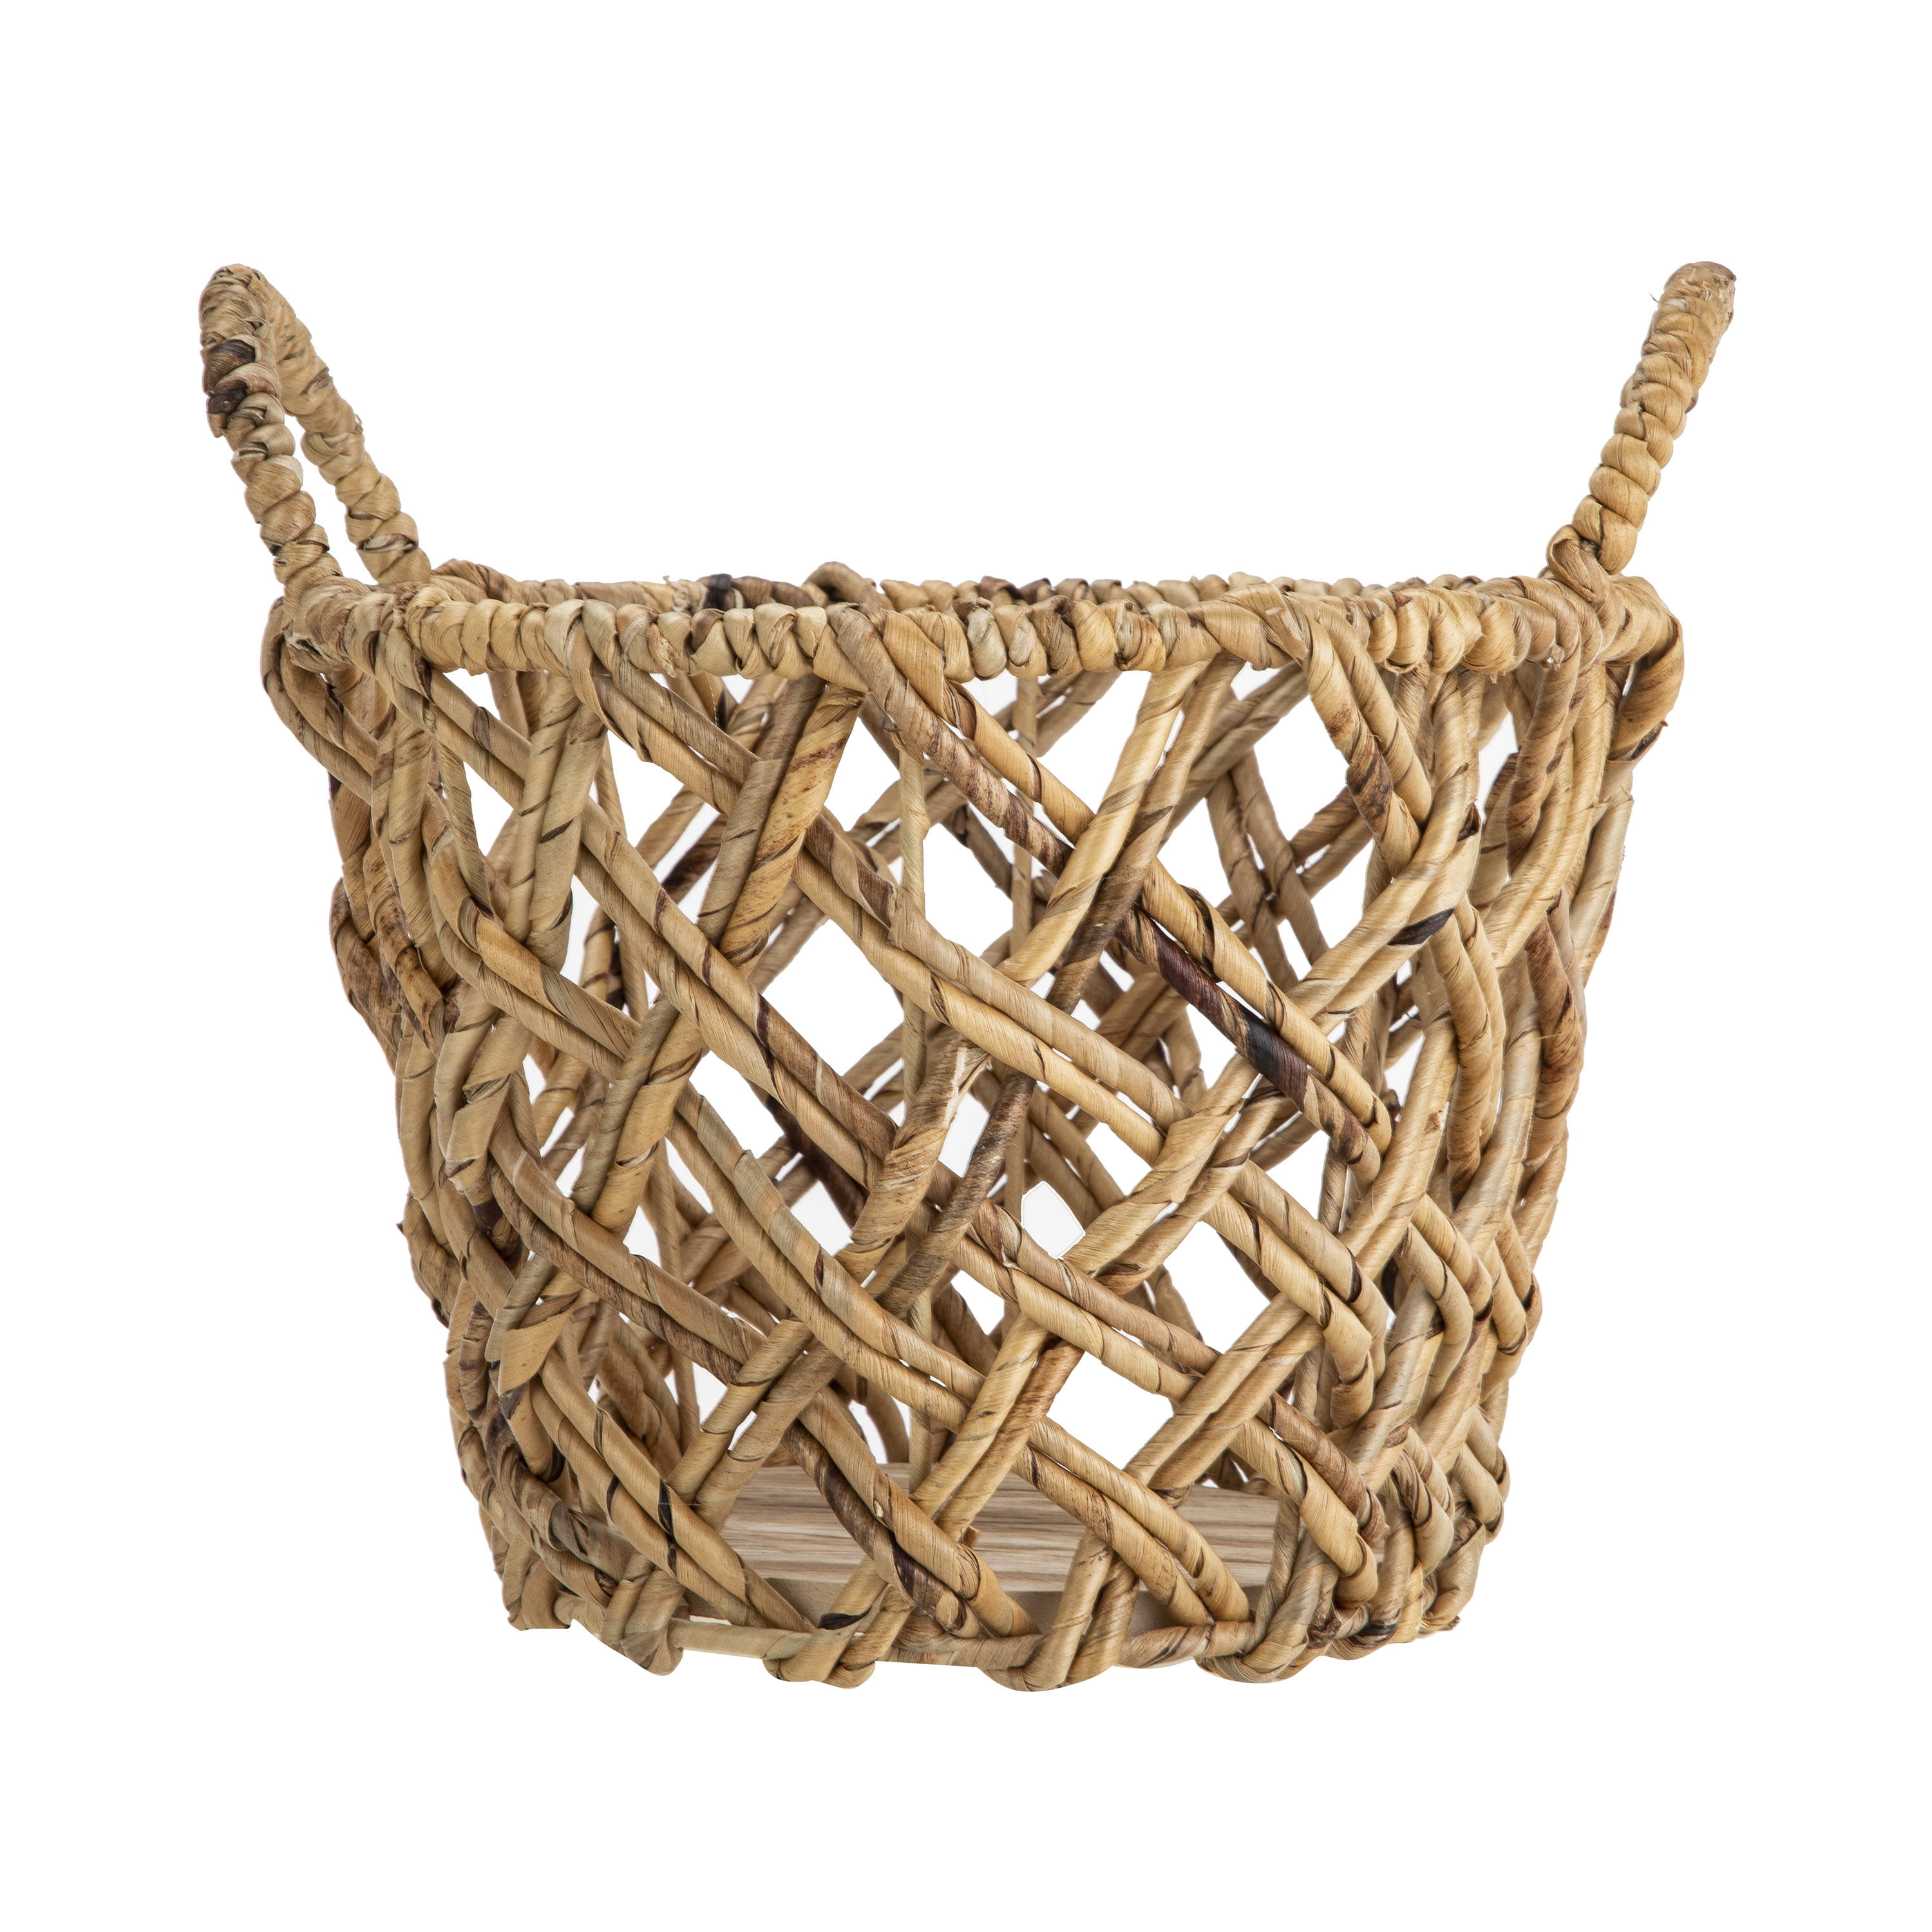 Mainstays Water Hyacinth Round Decorative Storage Basket with Handles, 9.84"D x 9.44"H